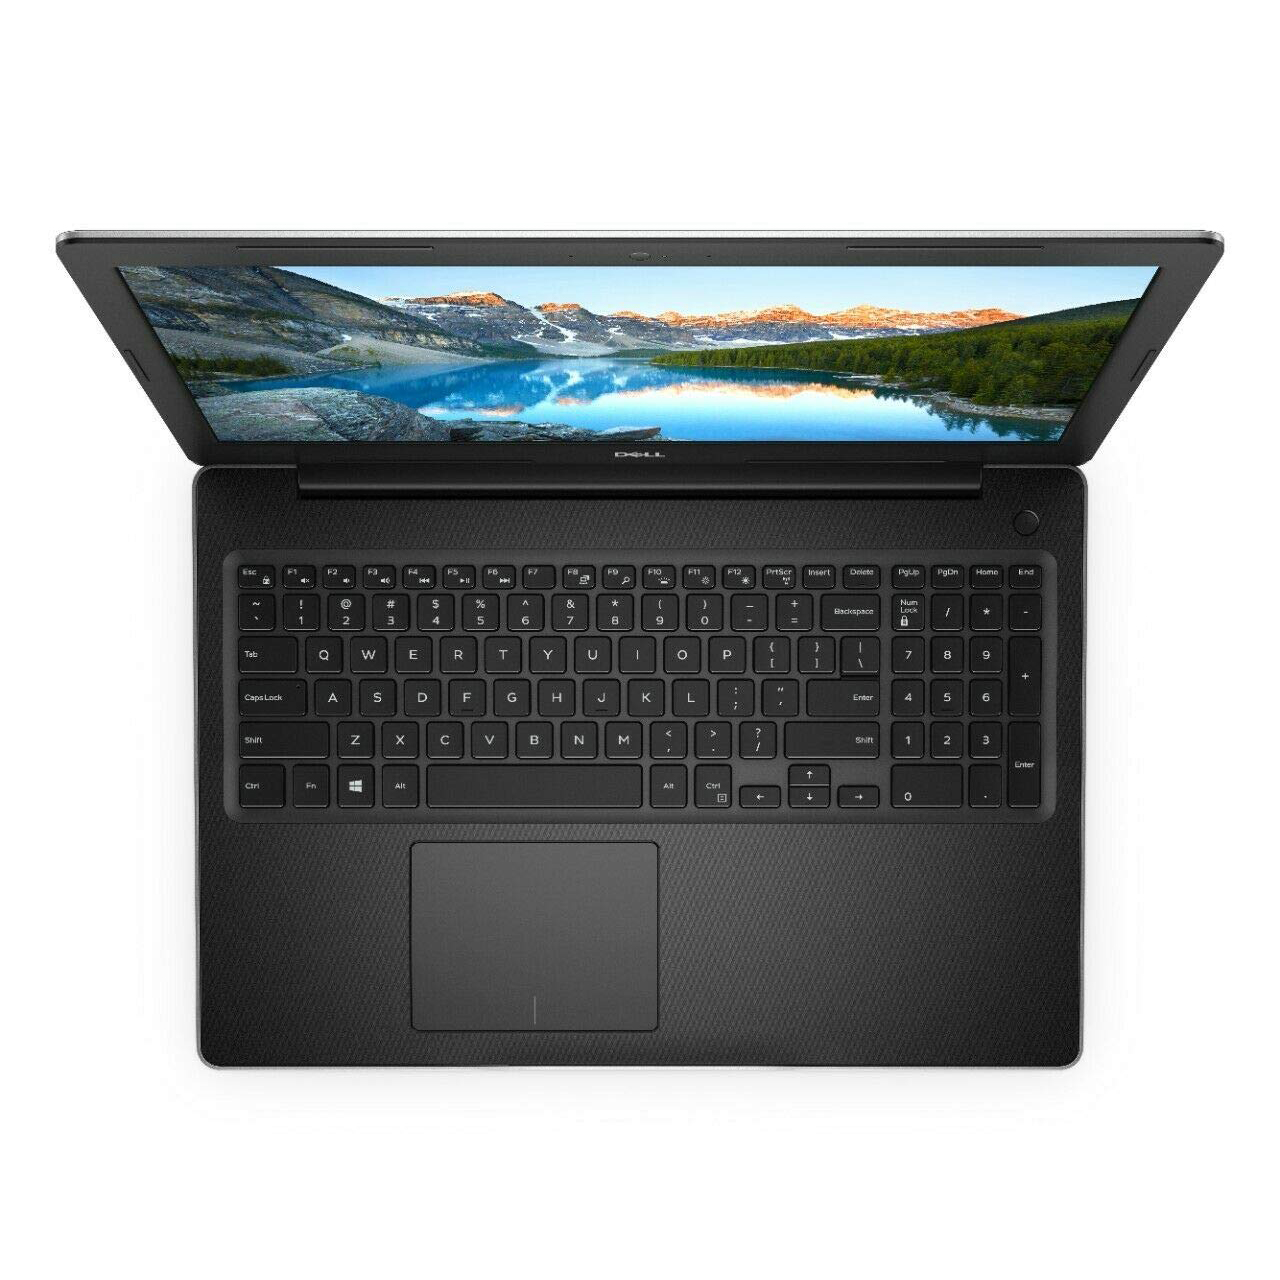 Laptop Dell Inspiron 3593B (i5 1035G1/4GB RAM/1TB HDD/15.6 inch FHD/Win 10/Đen) - P75F013